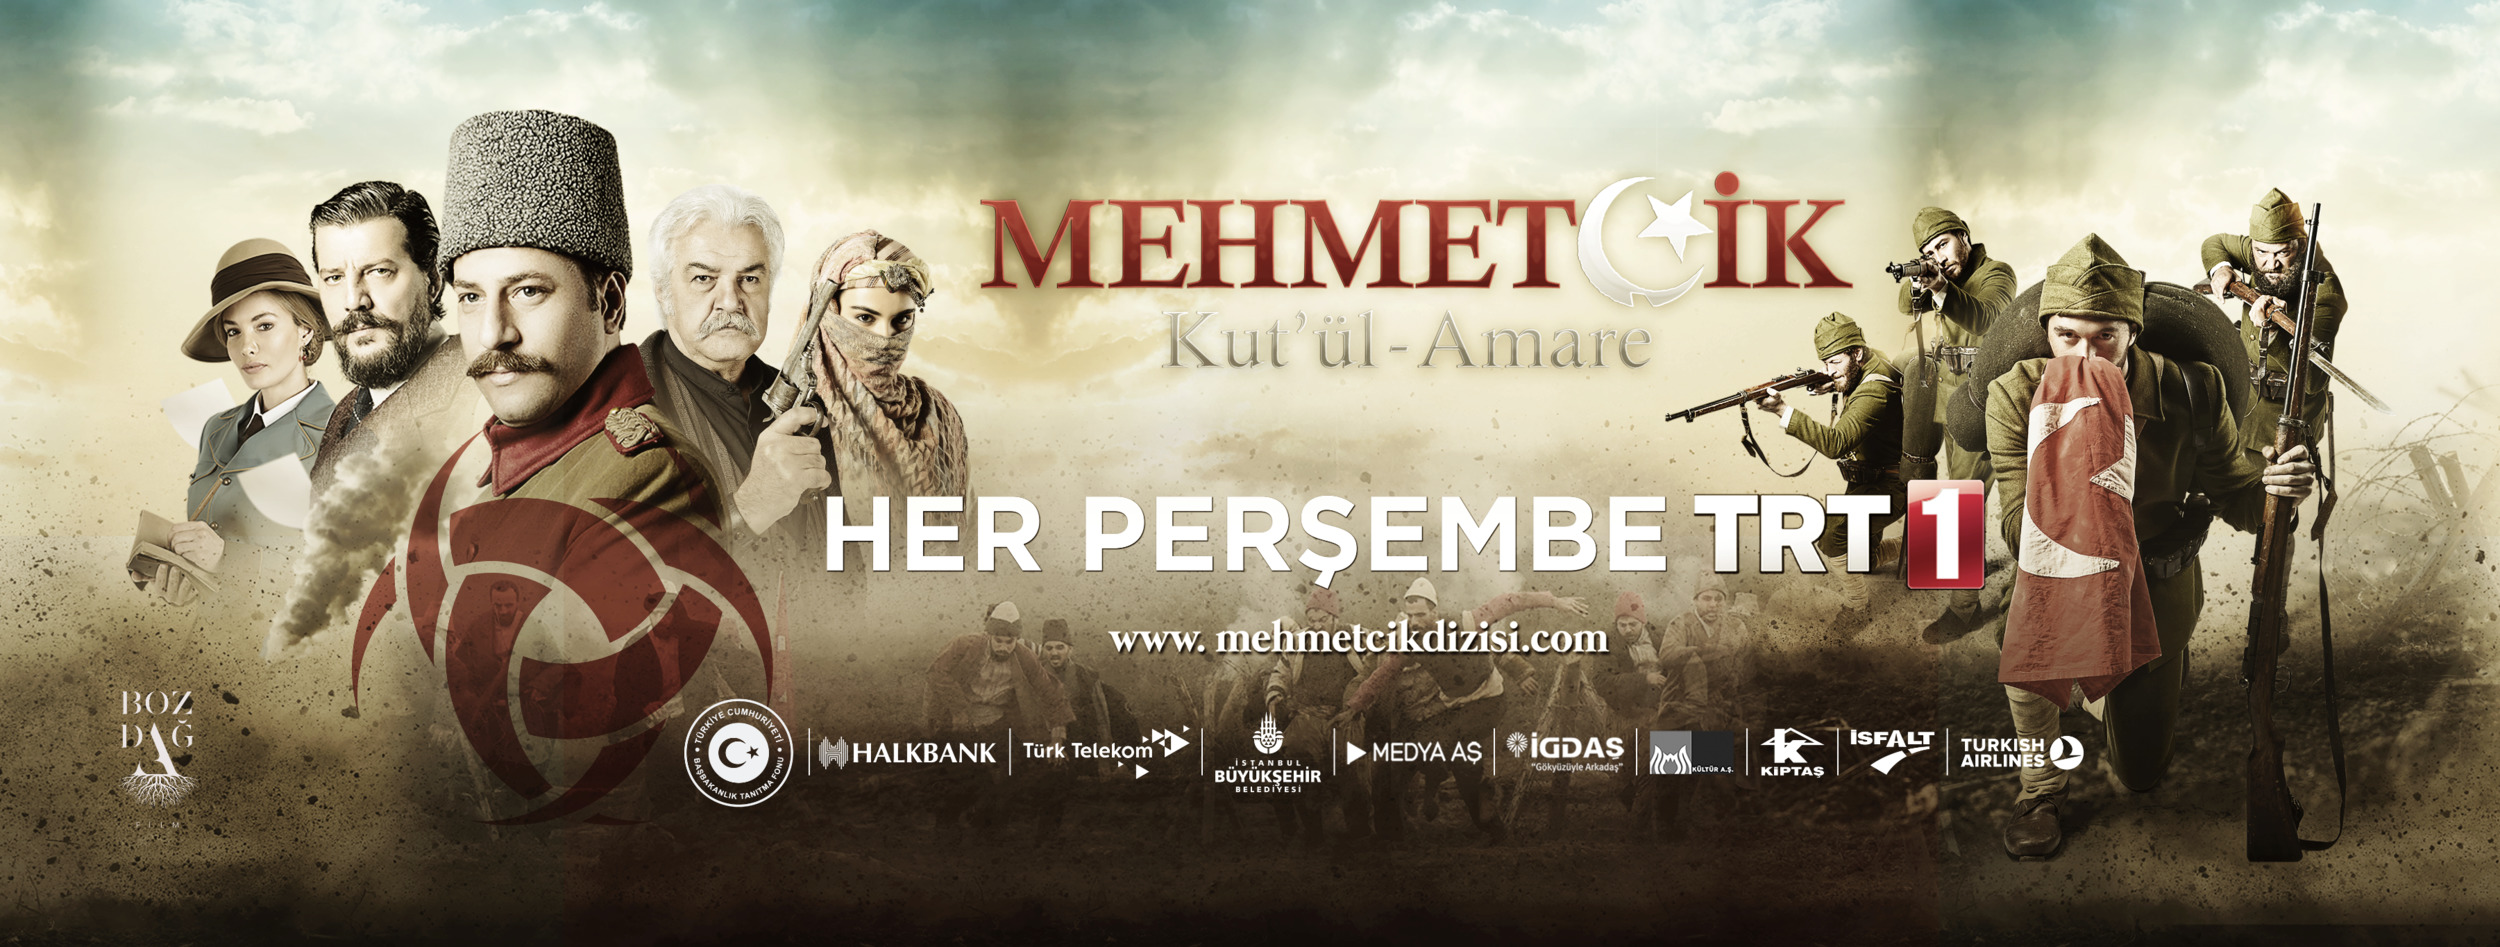 Mega Sized TV Poster Image for Mehmetçik Kut'ül Amare (#33 of 41)